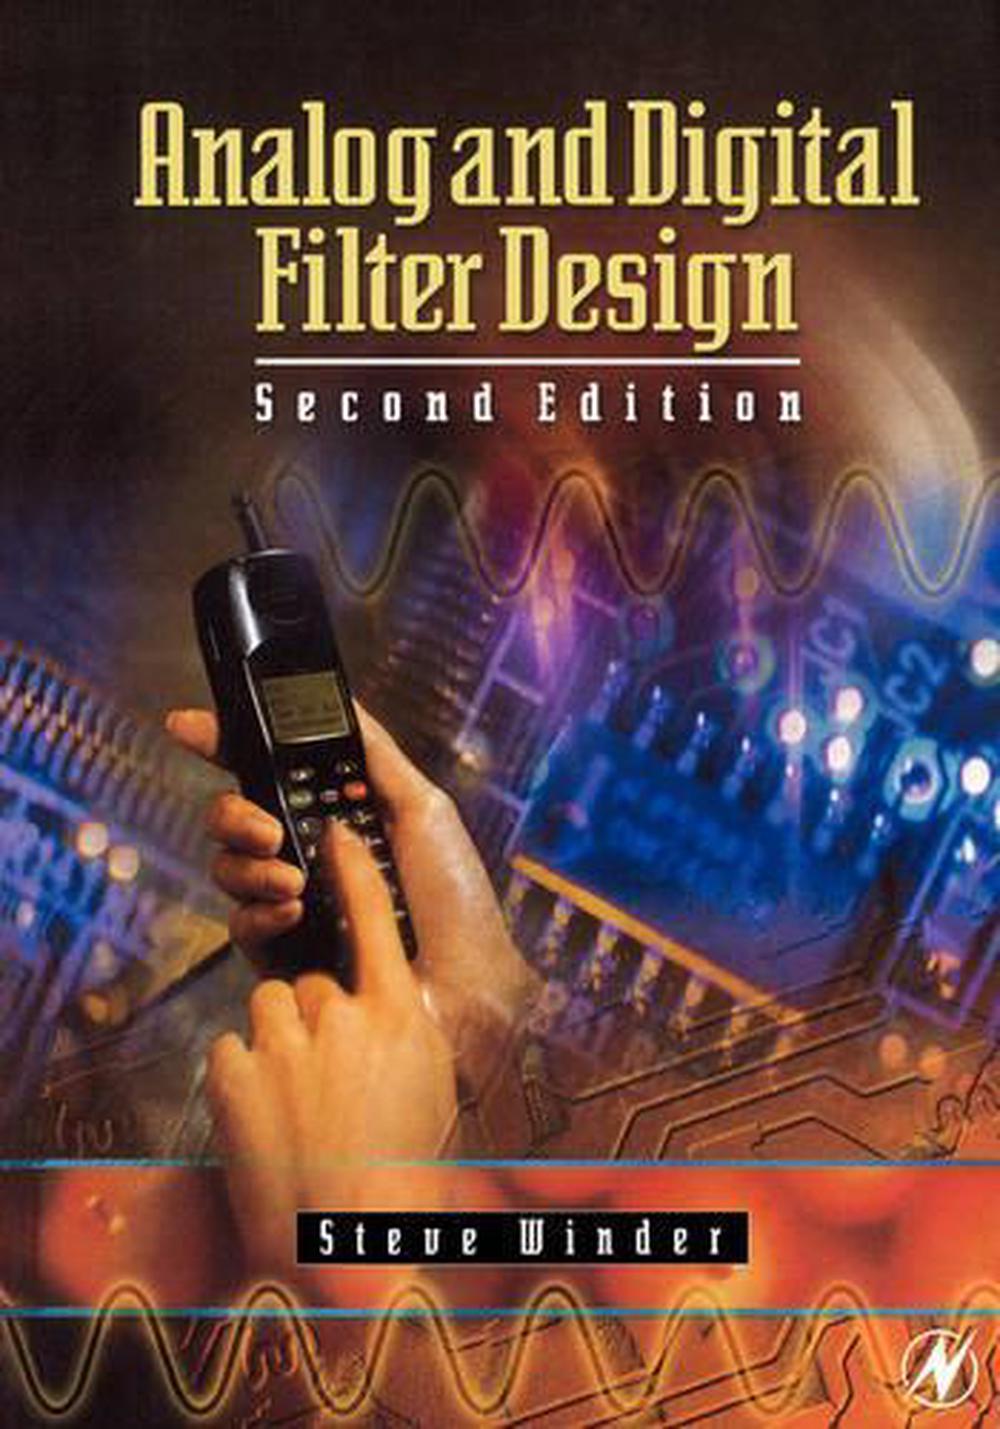 digital filter designer